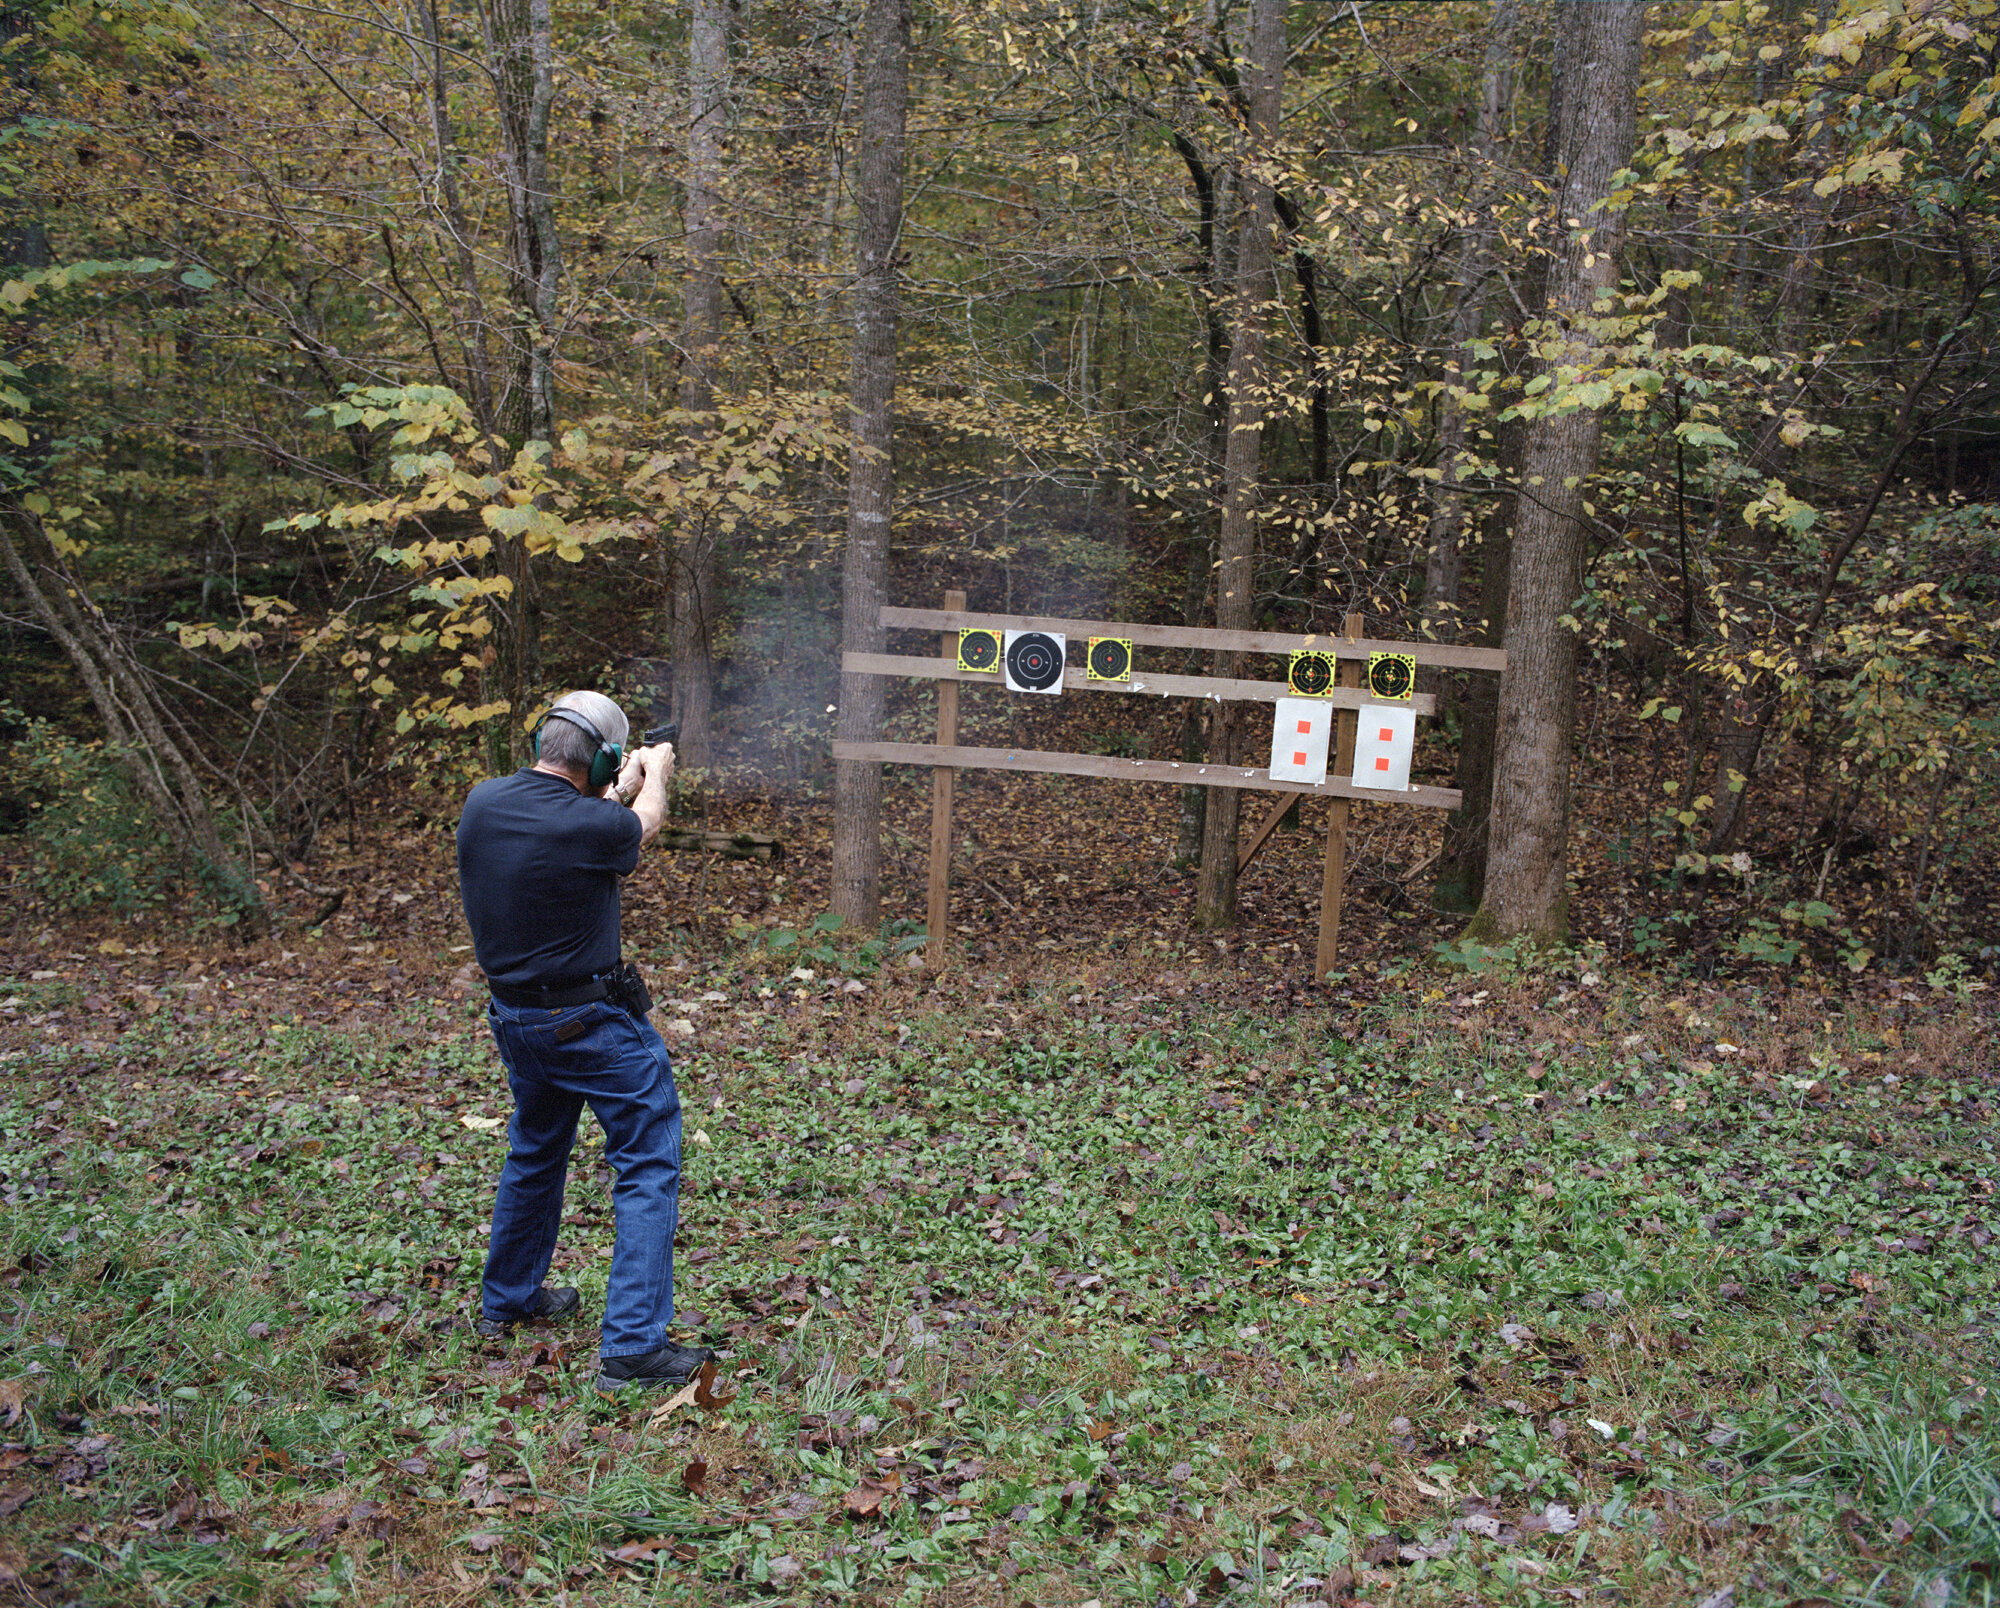 Shooting Range, Bostic, 2019